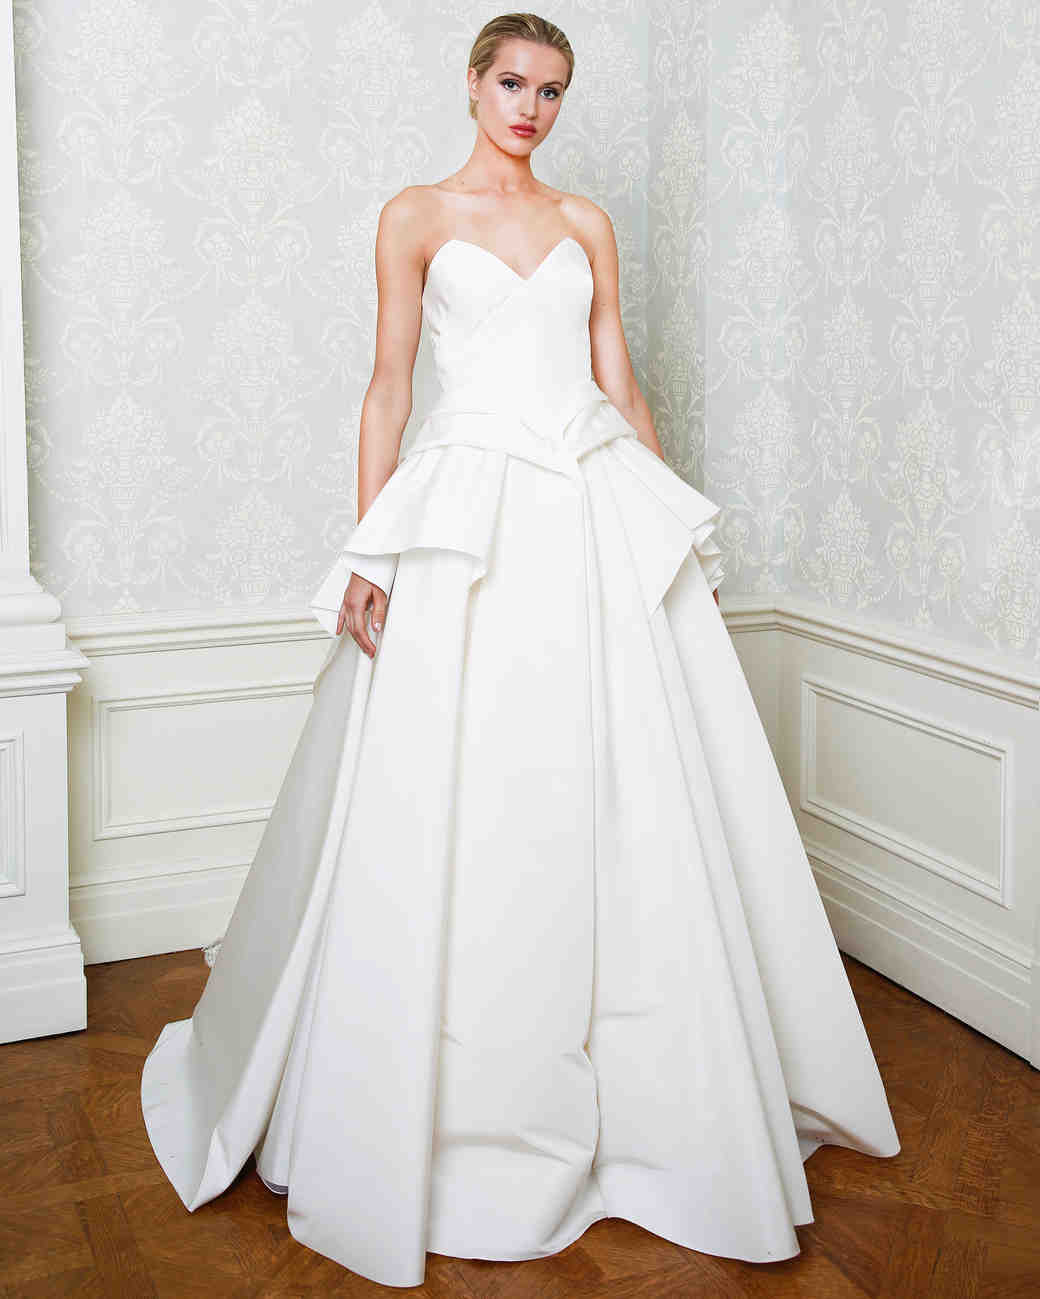 Cristina Ottaviano Spring 2019 Wedding Dress Collection | Martha ...